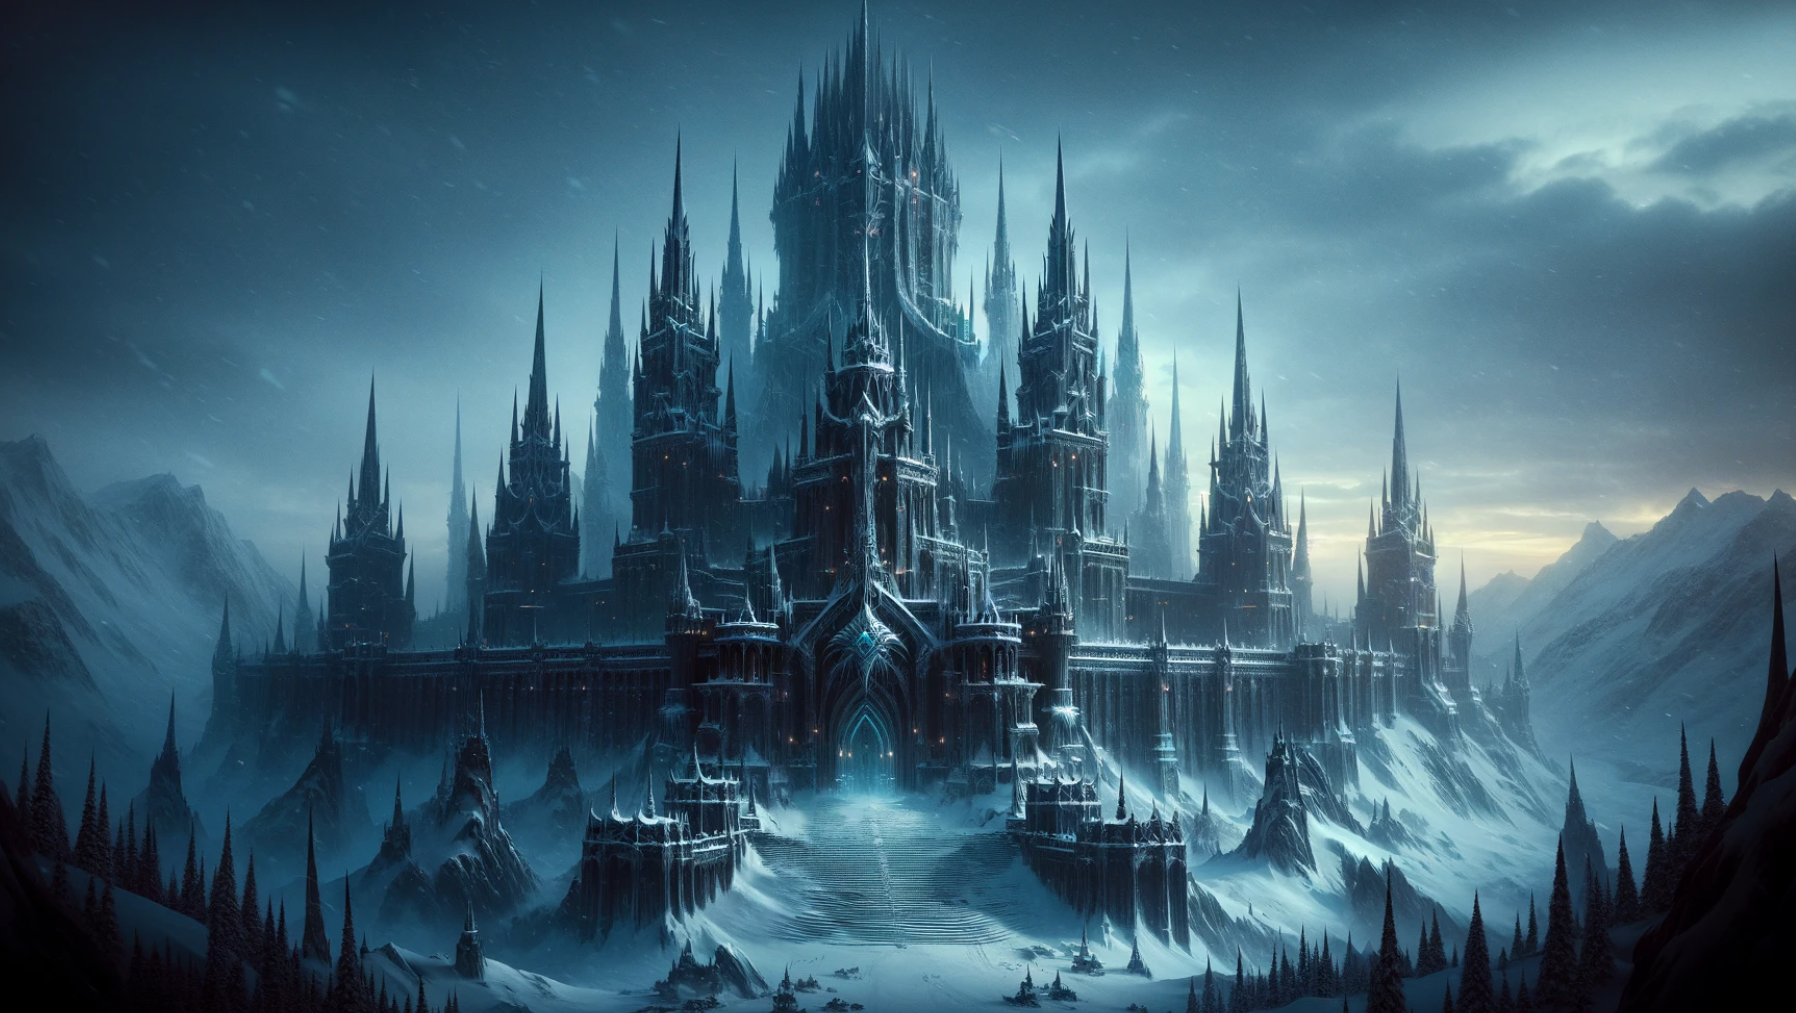 Icecrown Citadel WotLK 